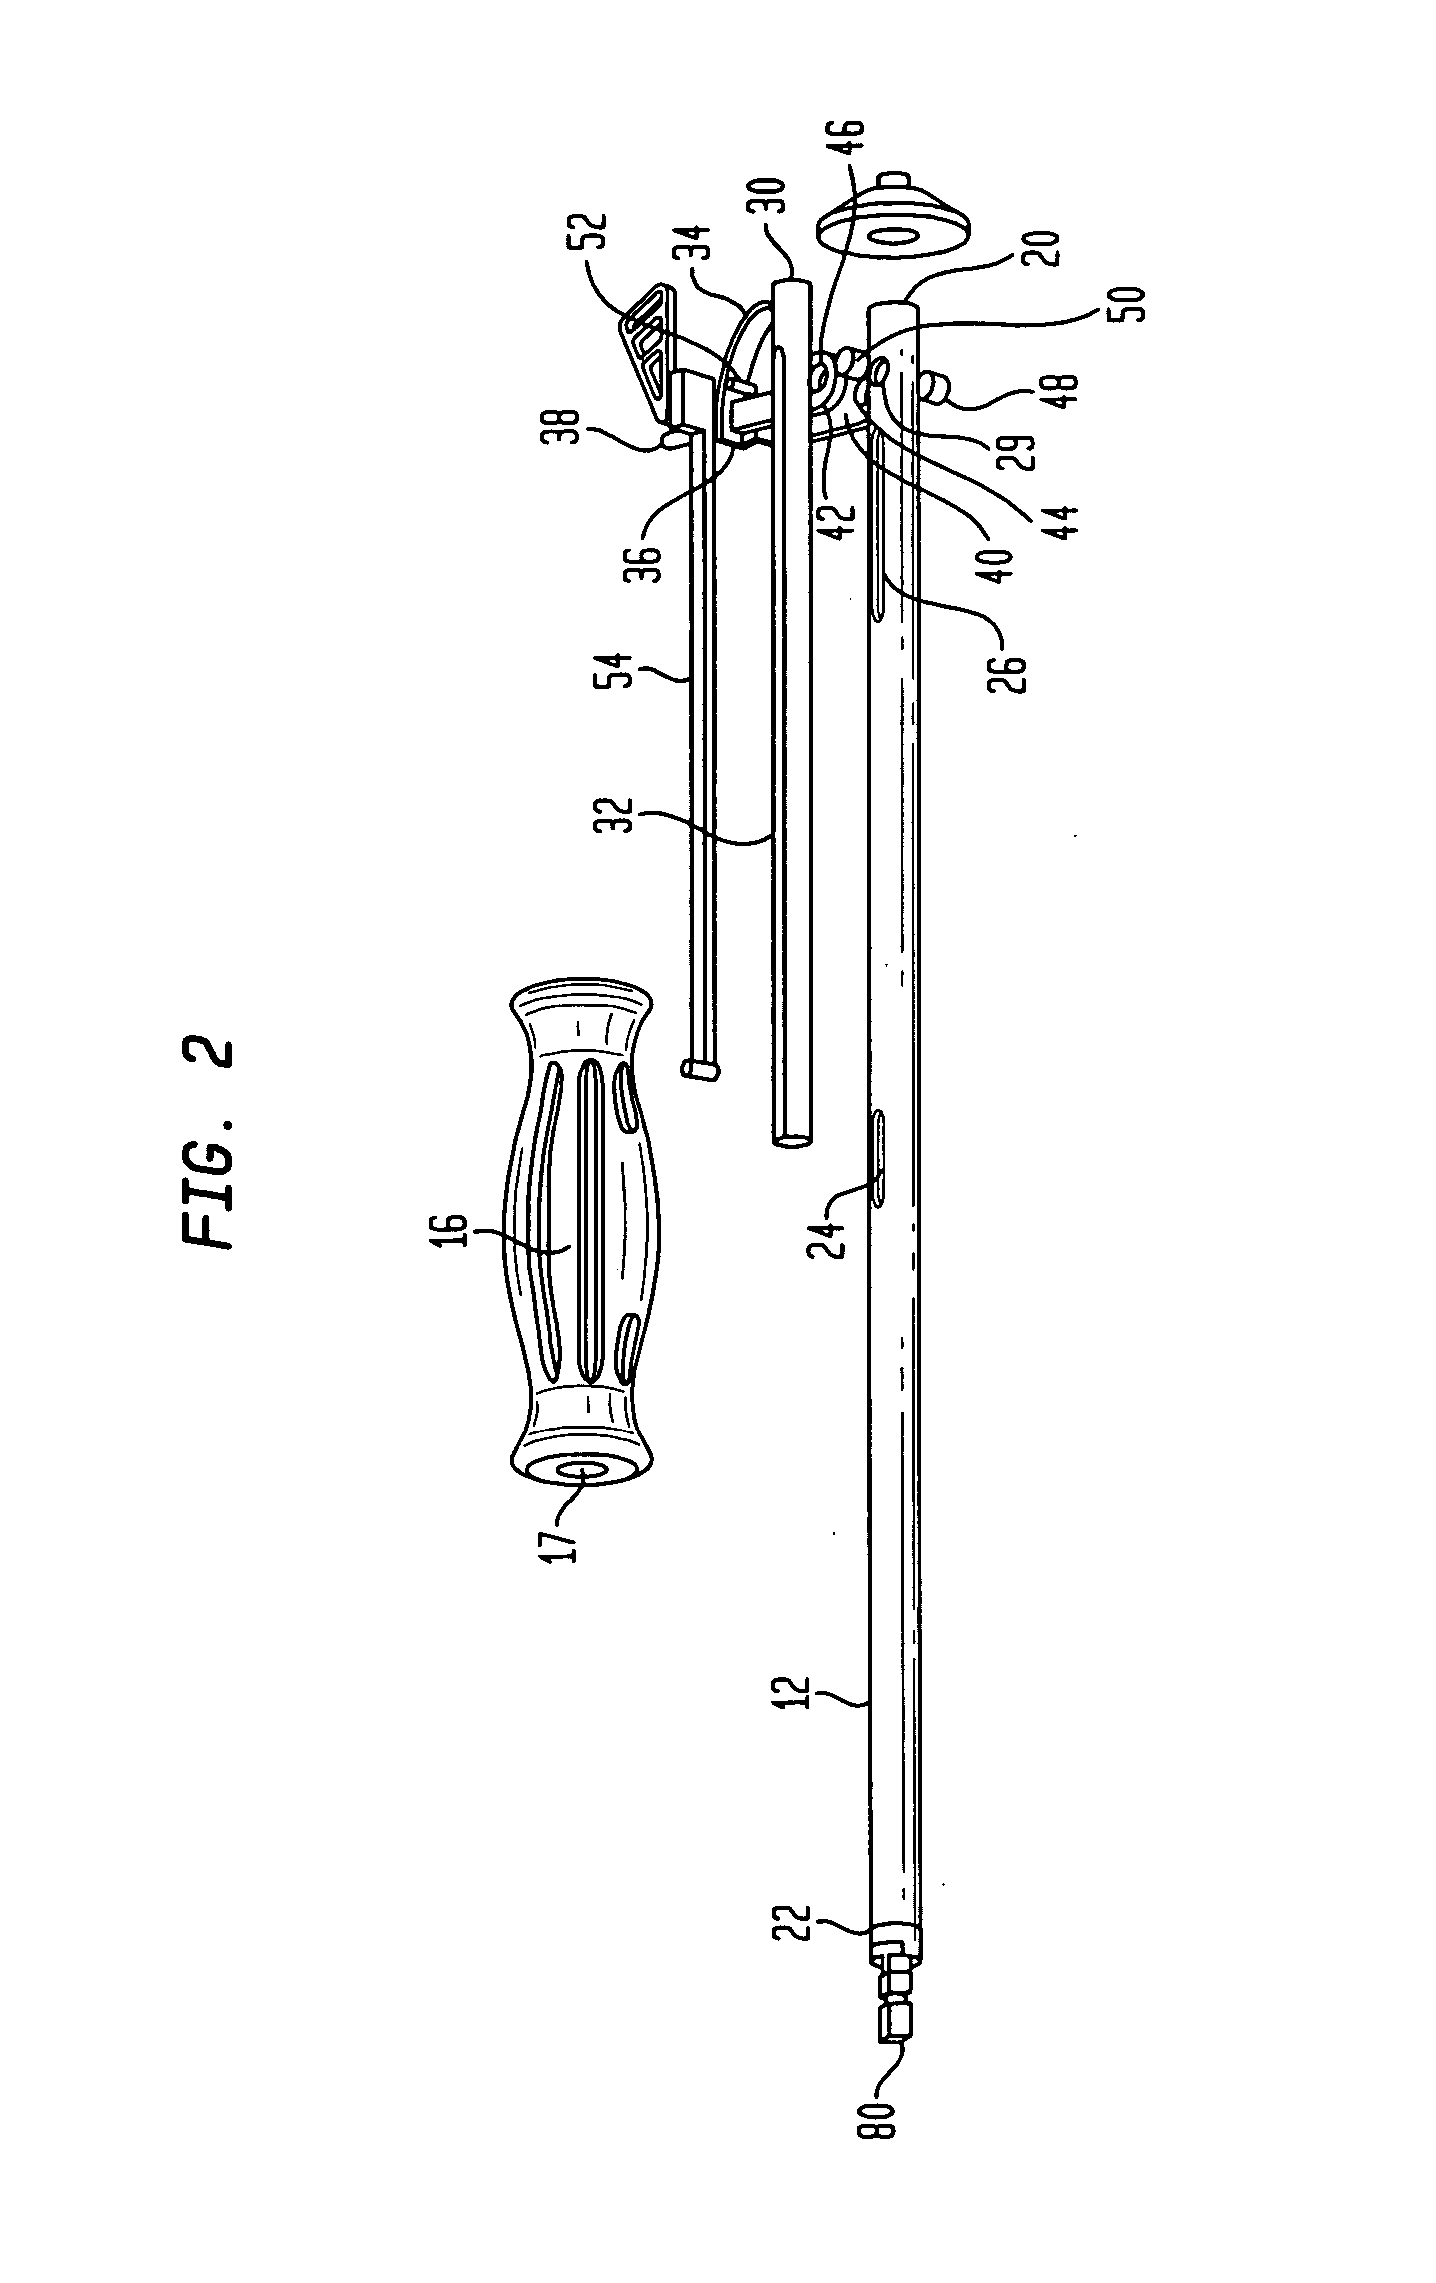 Acetabular shell removal instrument